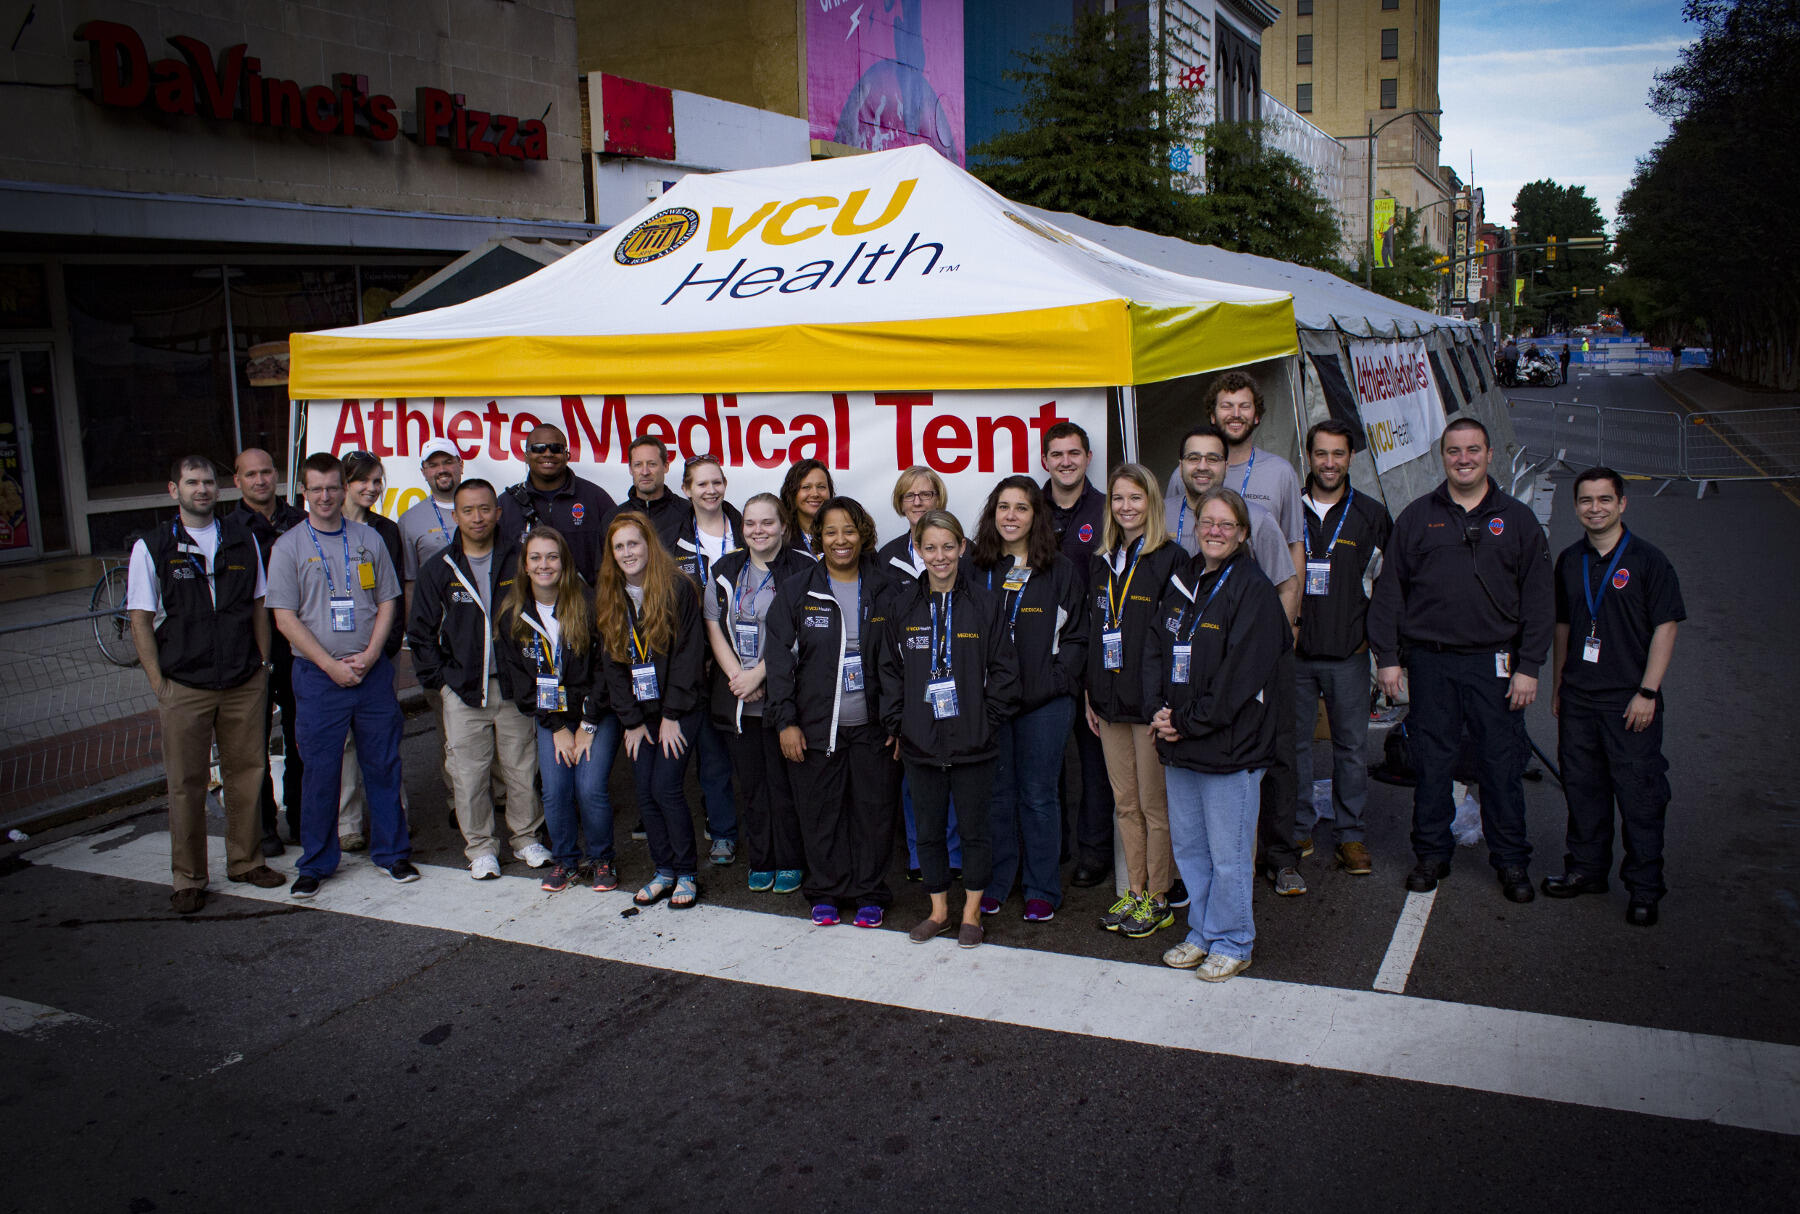 VCU Health medical tent team members.